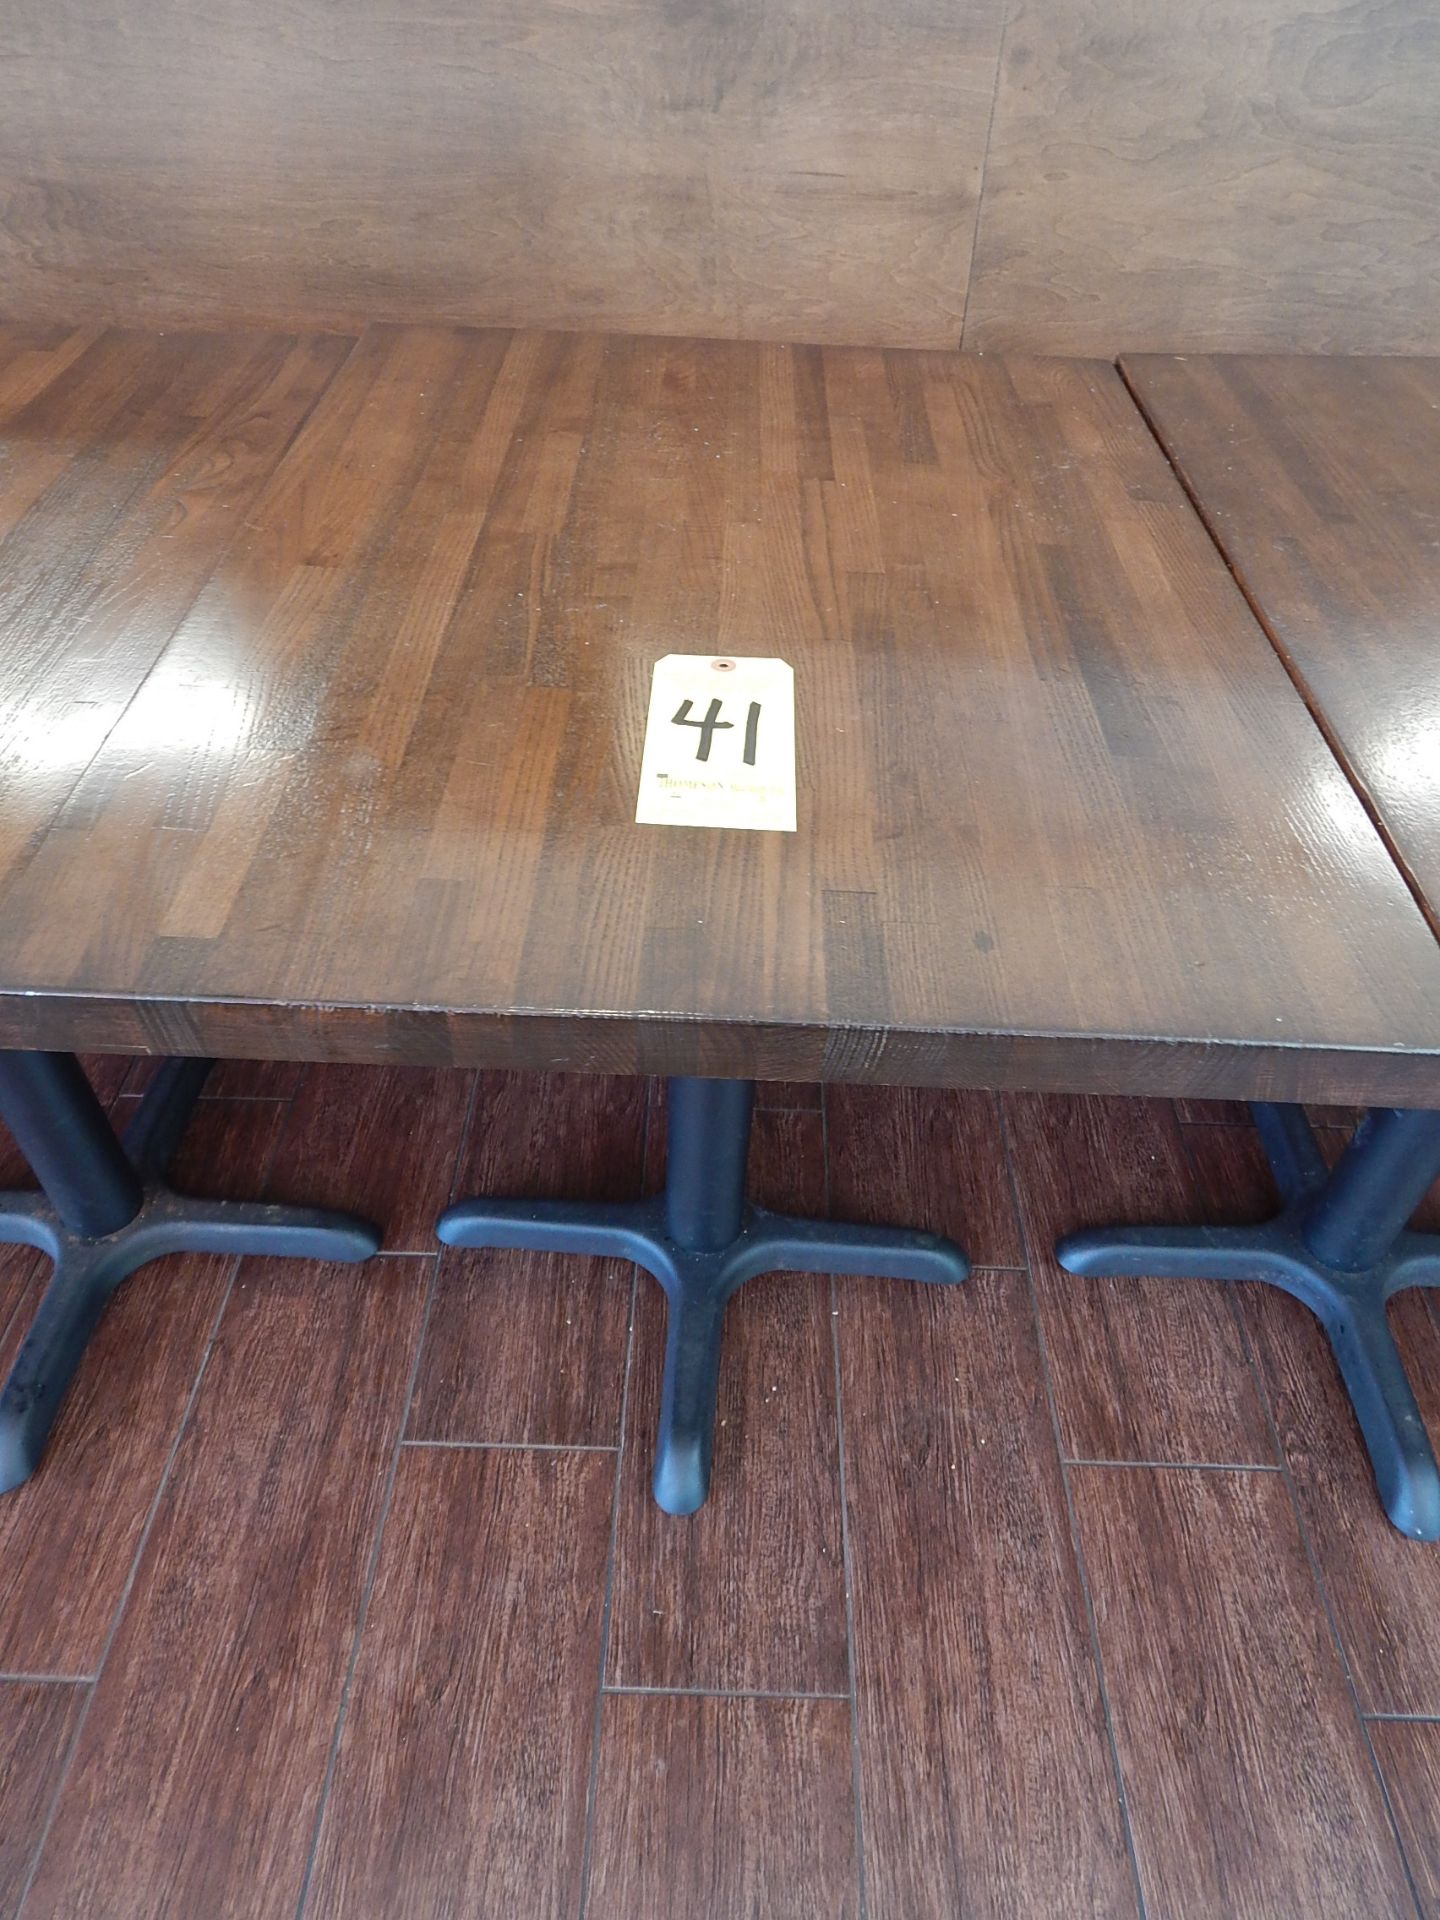 Rectangular Pedestal Base Table with Wood Top, 24" x 30"